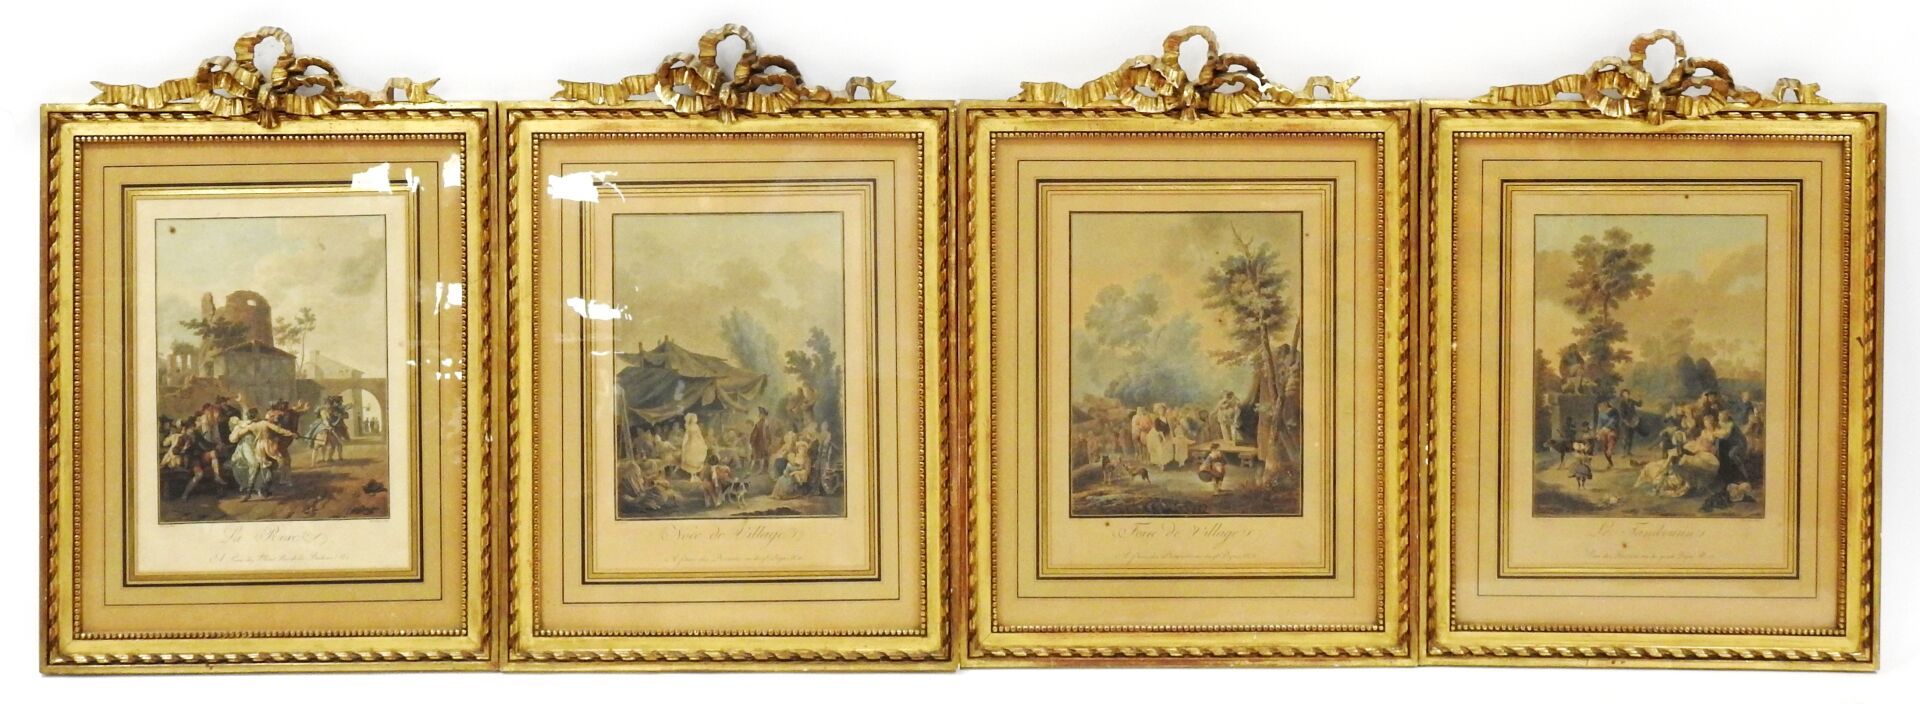 Null 尼古拉-安托万-陶奈(约1755-1830)之后

带有路易十六风格蝴蝶结的四幅版画组曲：《乡村集市》、《手鼓》、《瑞克斯》、《乡村婚礼》。

.

&hellip;